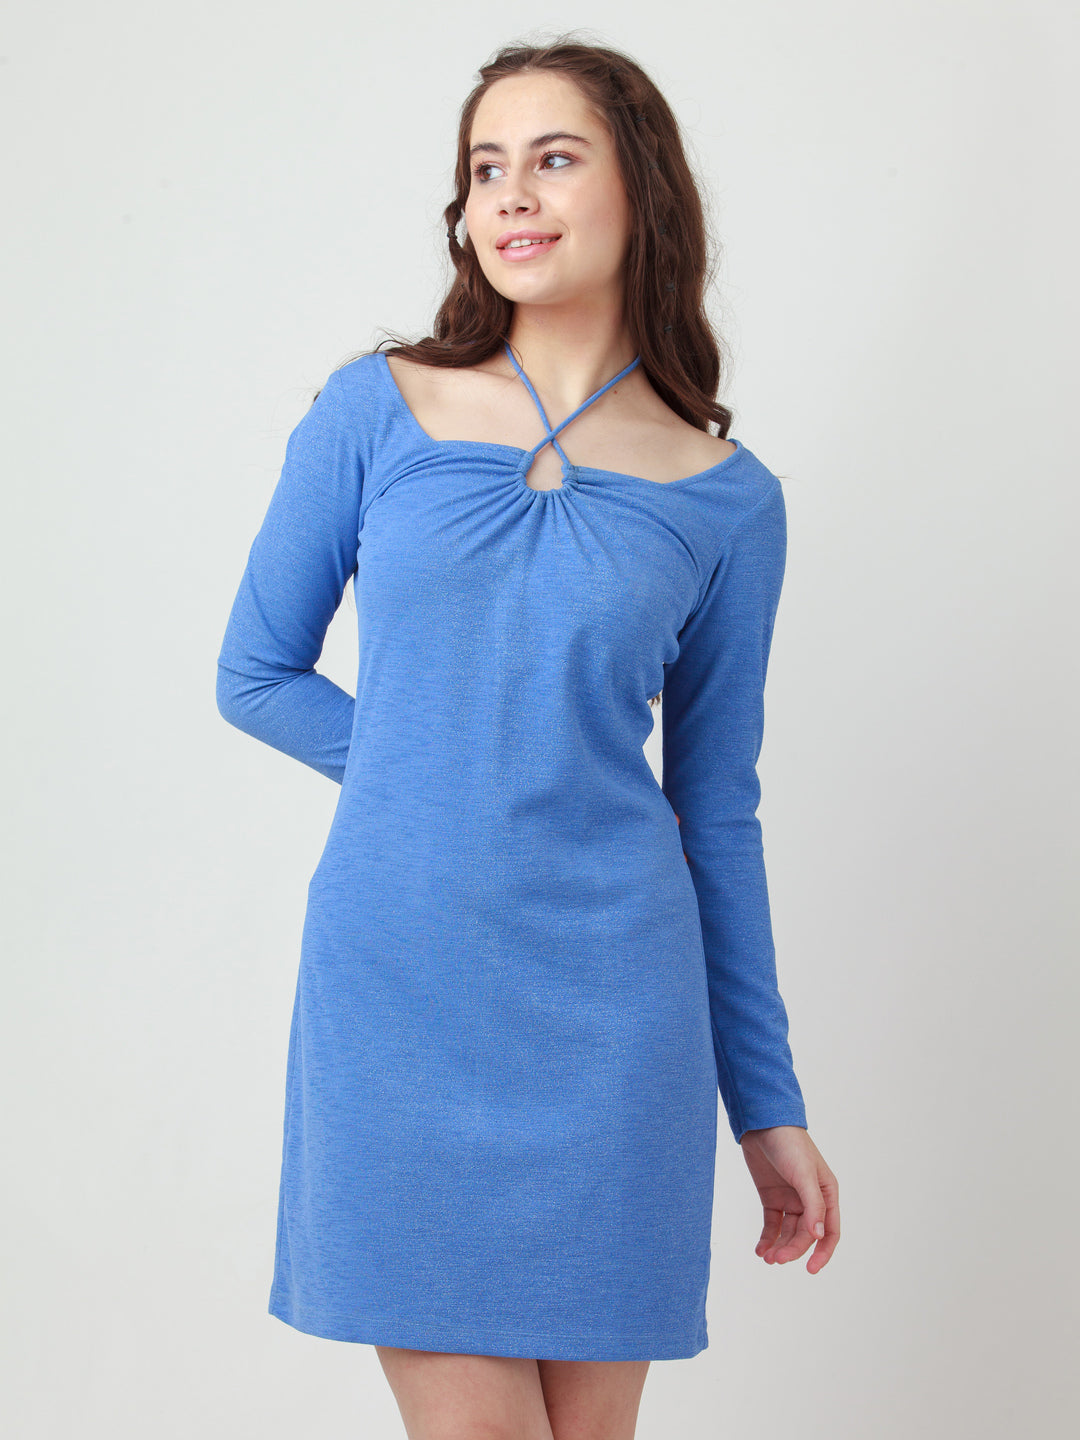 Blue Shimmer Tie-Up Short Dress For Women